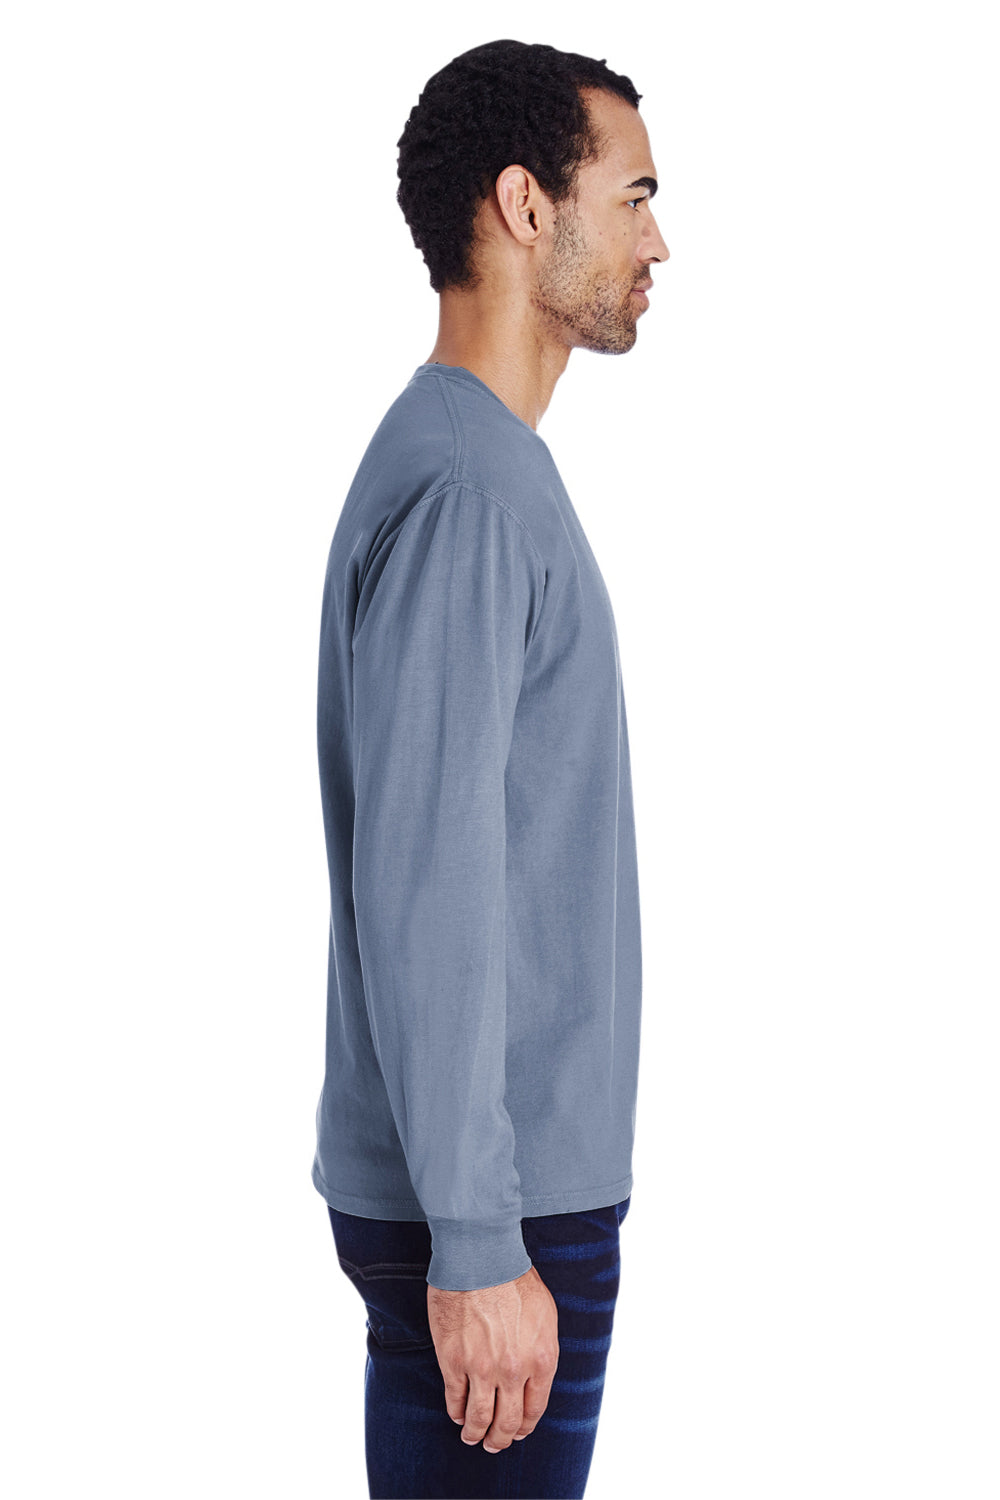 ComfortWash by Hanes GDH250 Long Sleeve Crewneck T-Shirt w/ Pocket Saltwater Blue Side